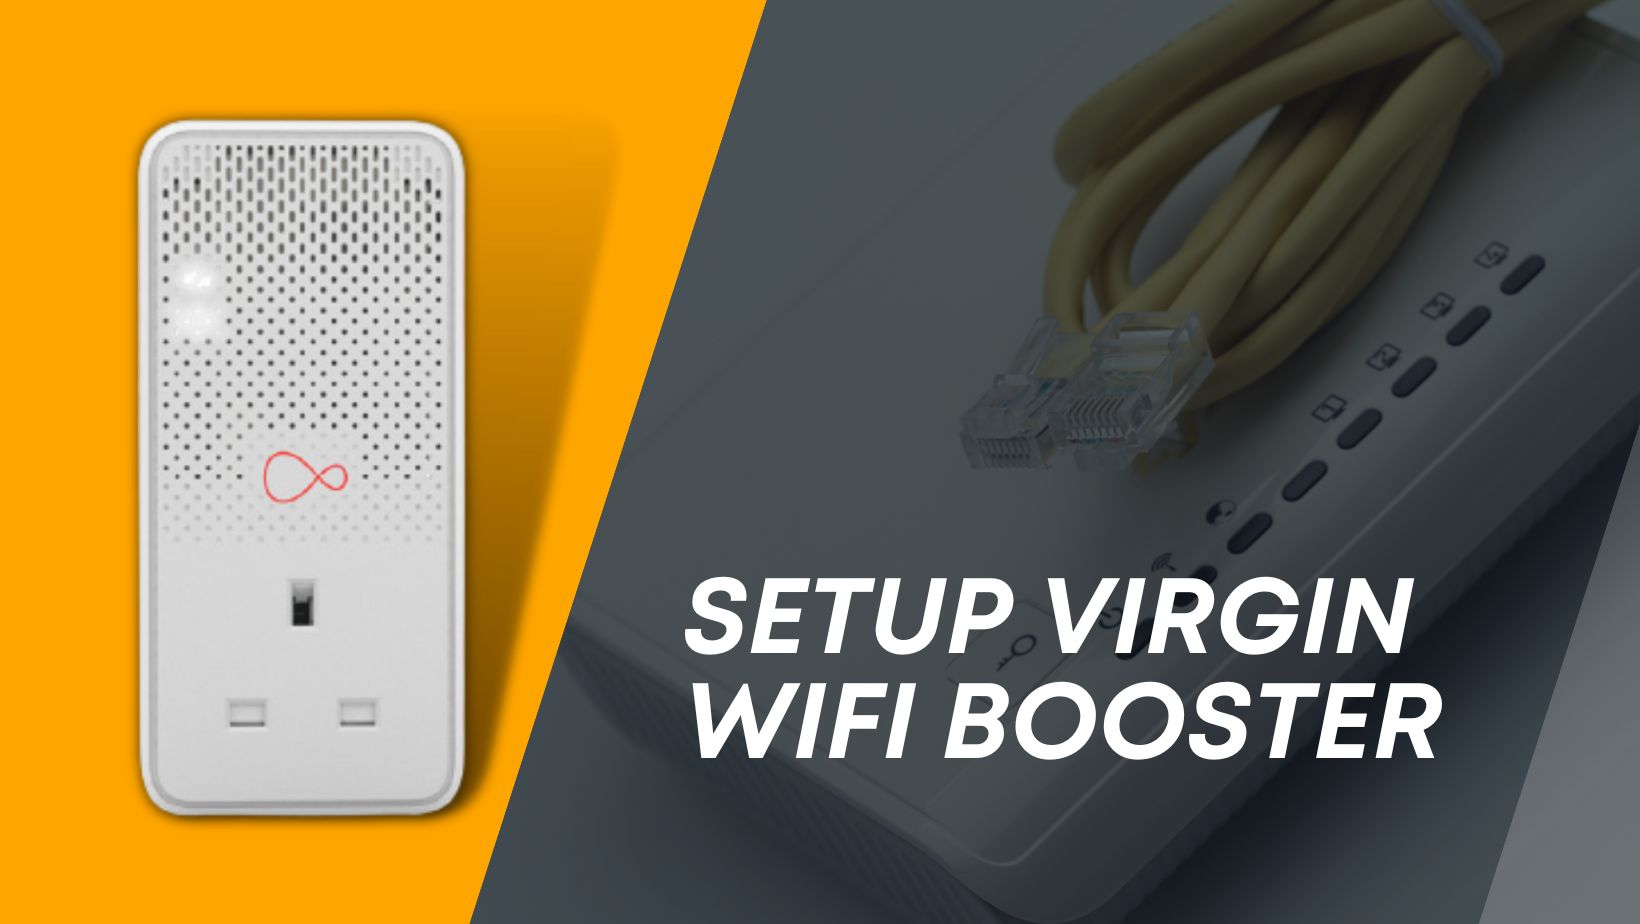 Virgin wifi booster